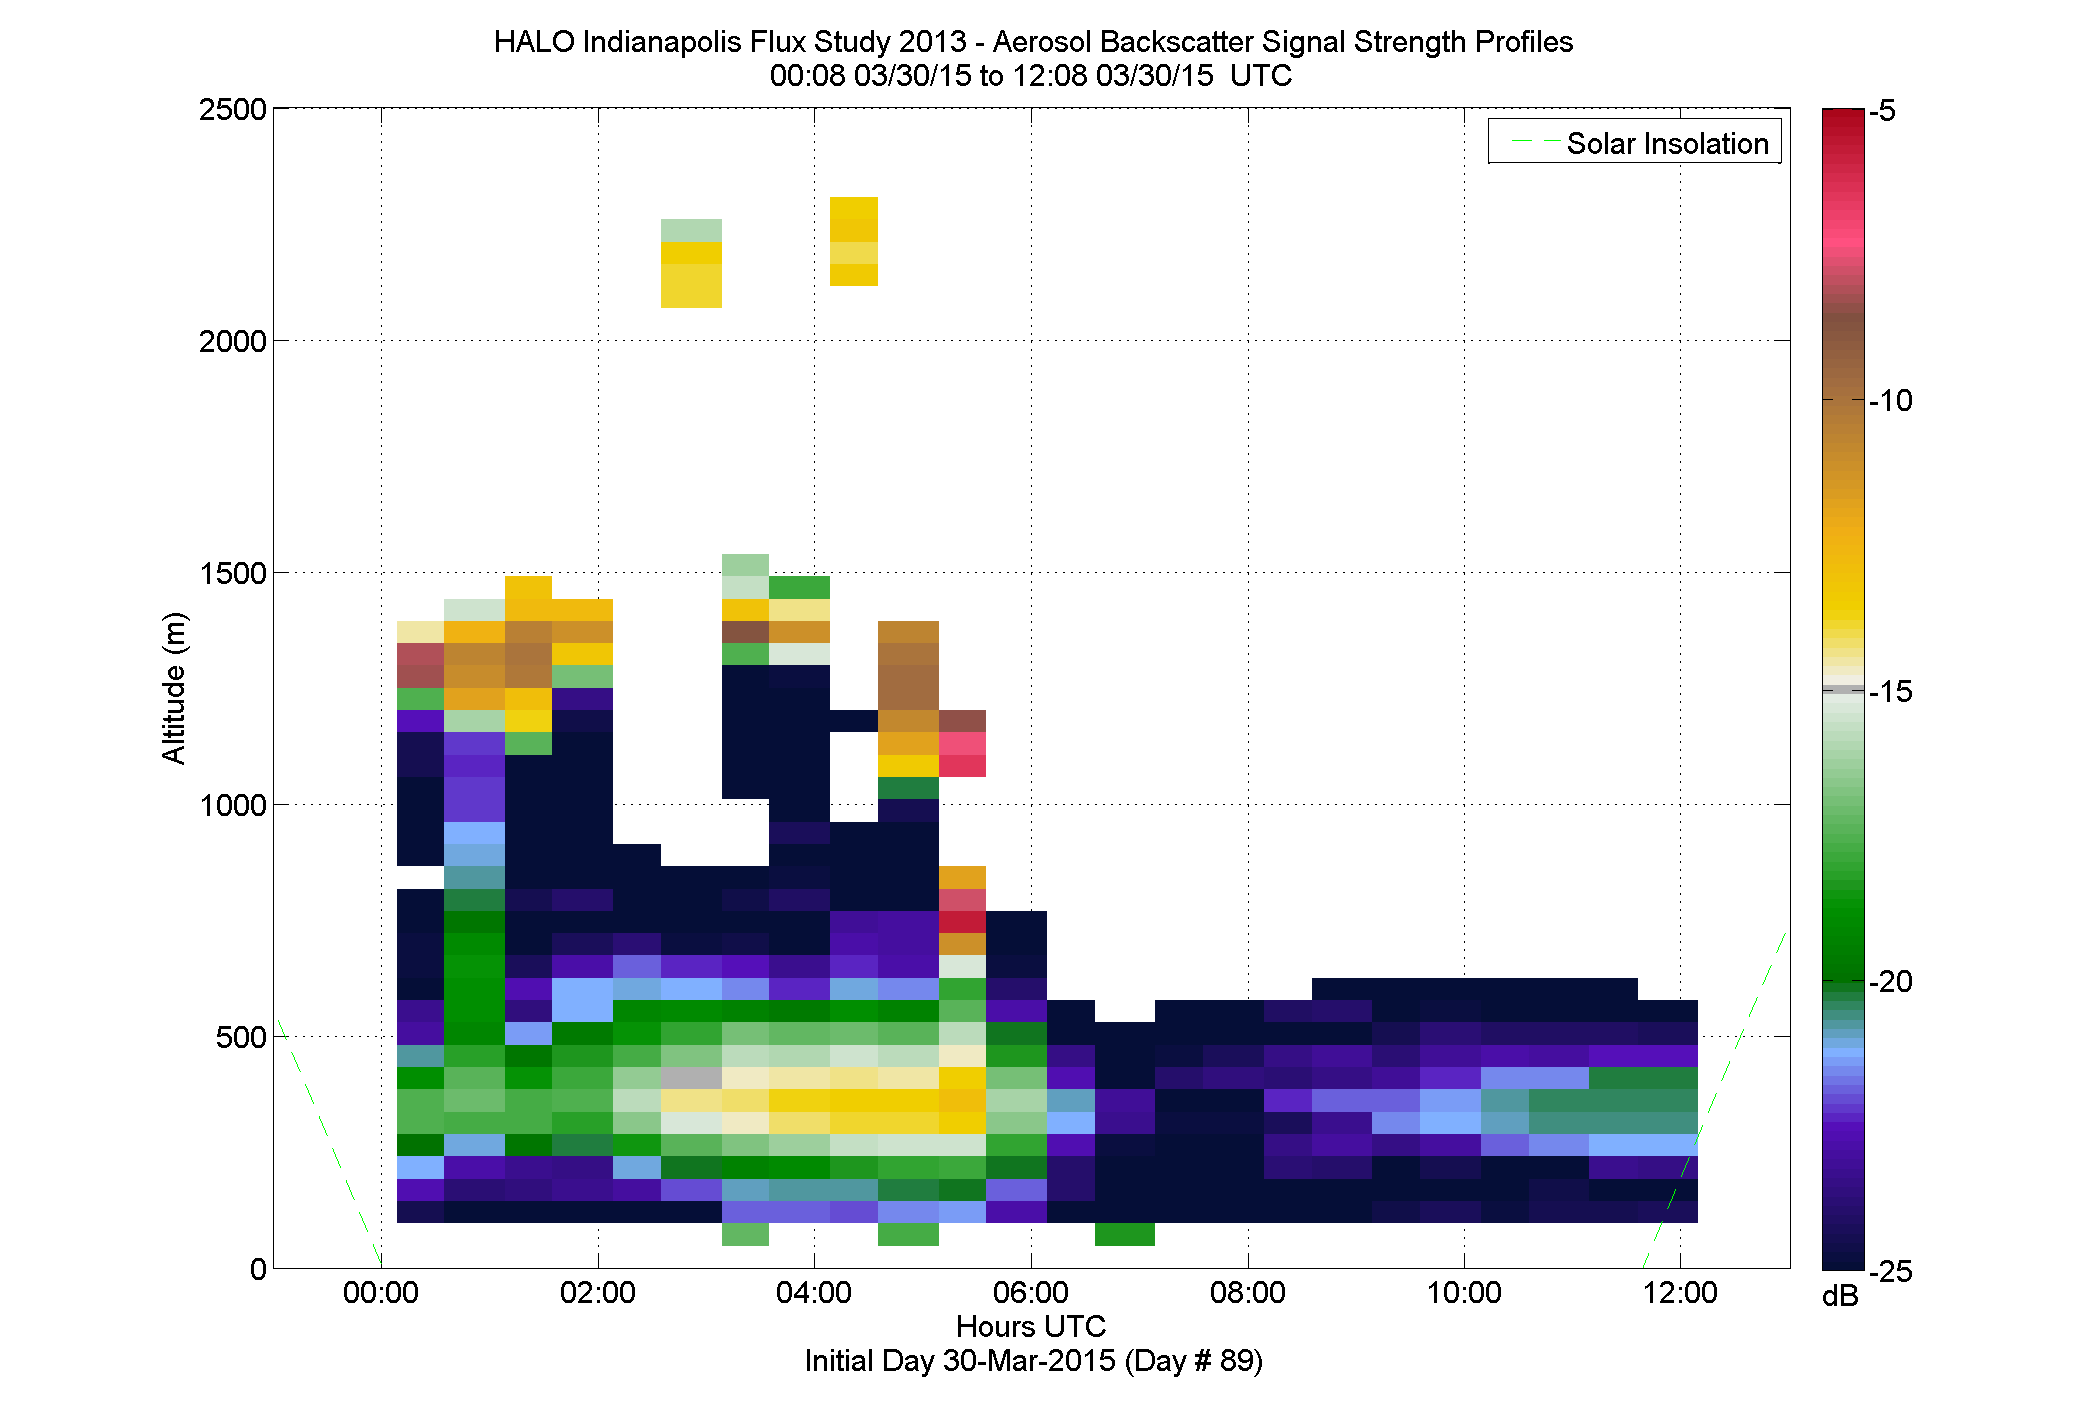 HALO aerosol backscatter signal strength profile - March 30 am